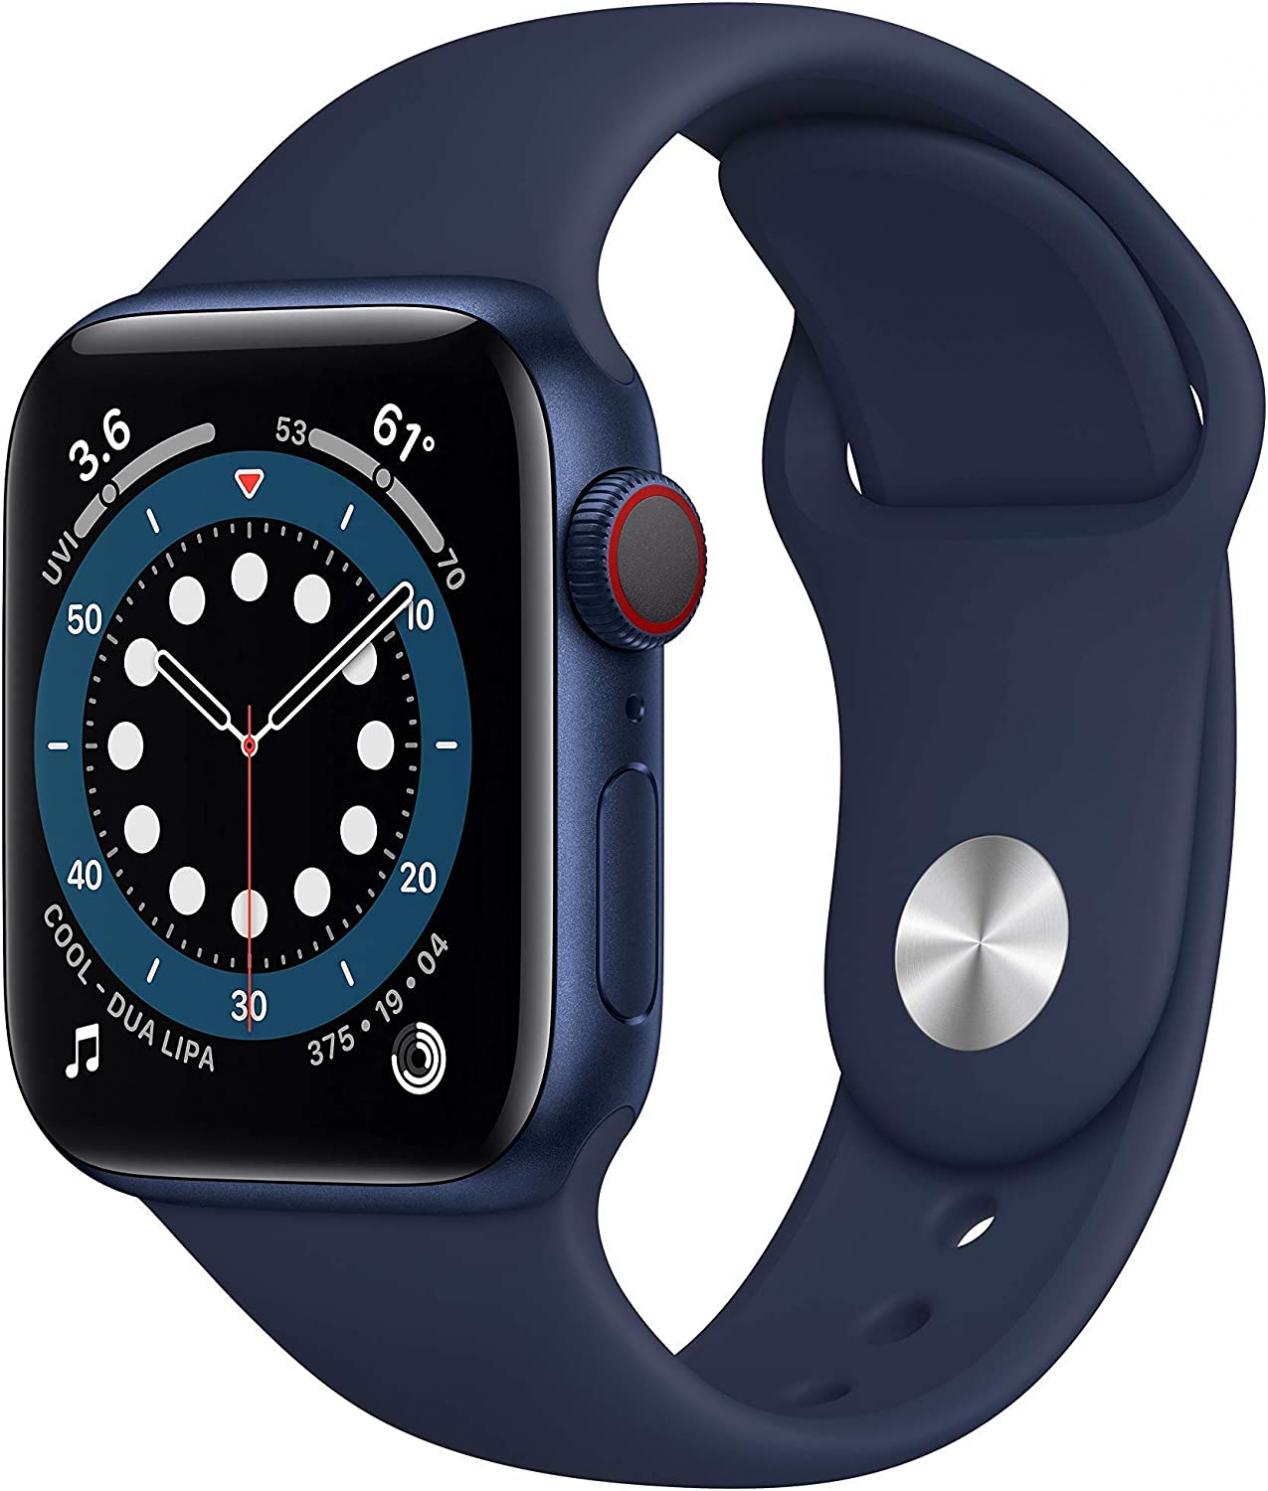 Apple Watch Series 6 (GPS + Cellular, 40mm) - Blue Aluminum Case with Deep Navy Sport Band (Renewed)